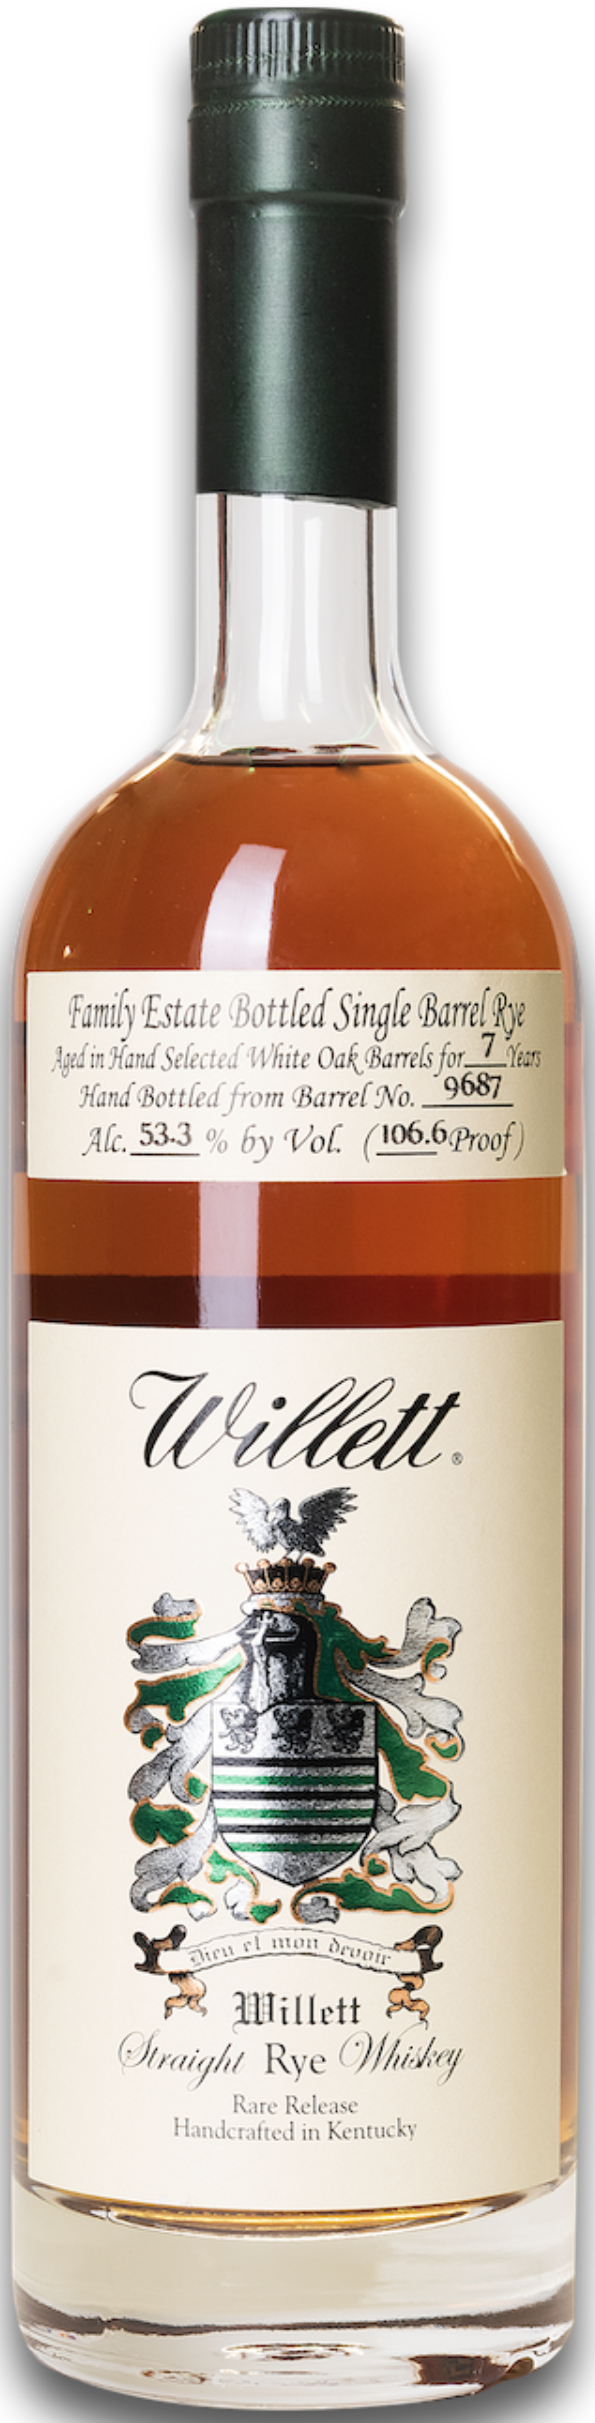 Willett Family Estate Single Barrel Rye Whiskey - WHA B&B Release 700ml 53.3% abv